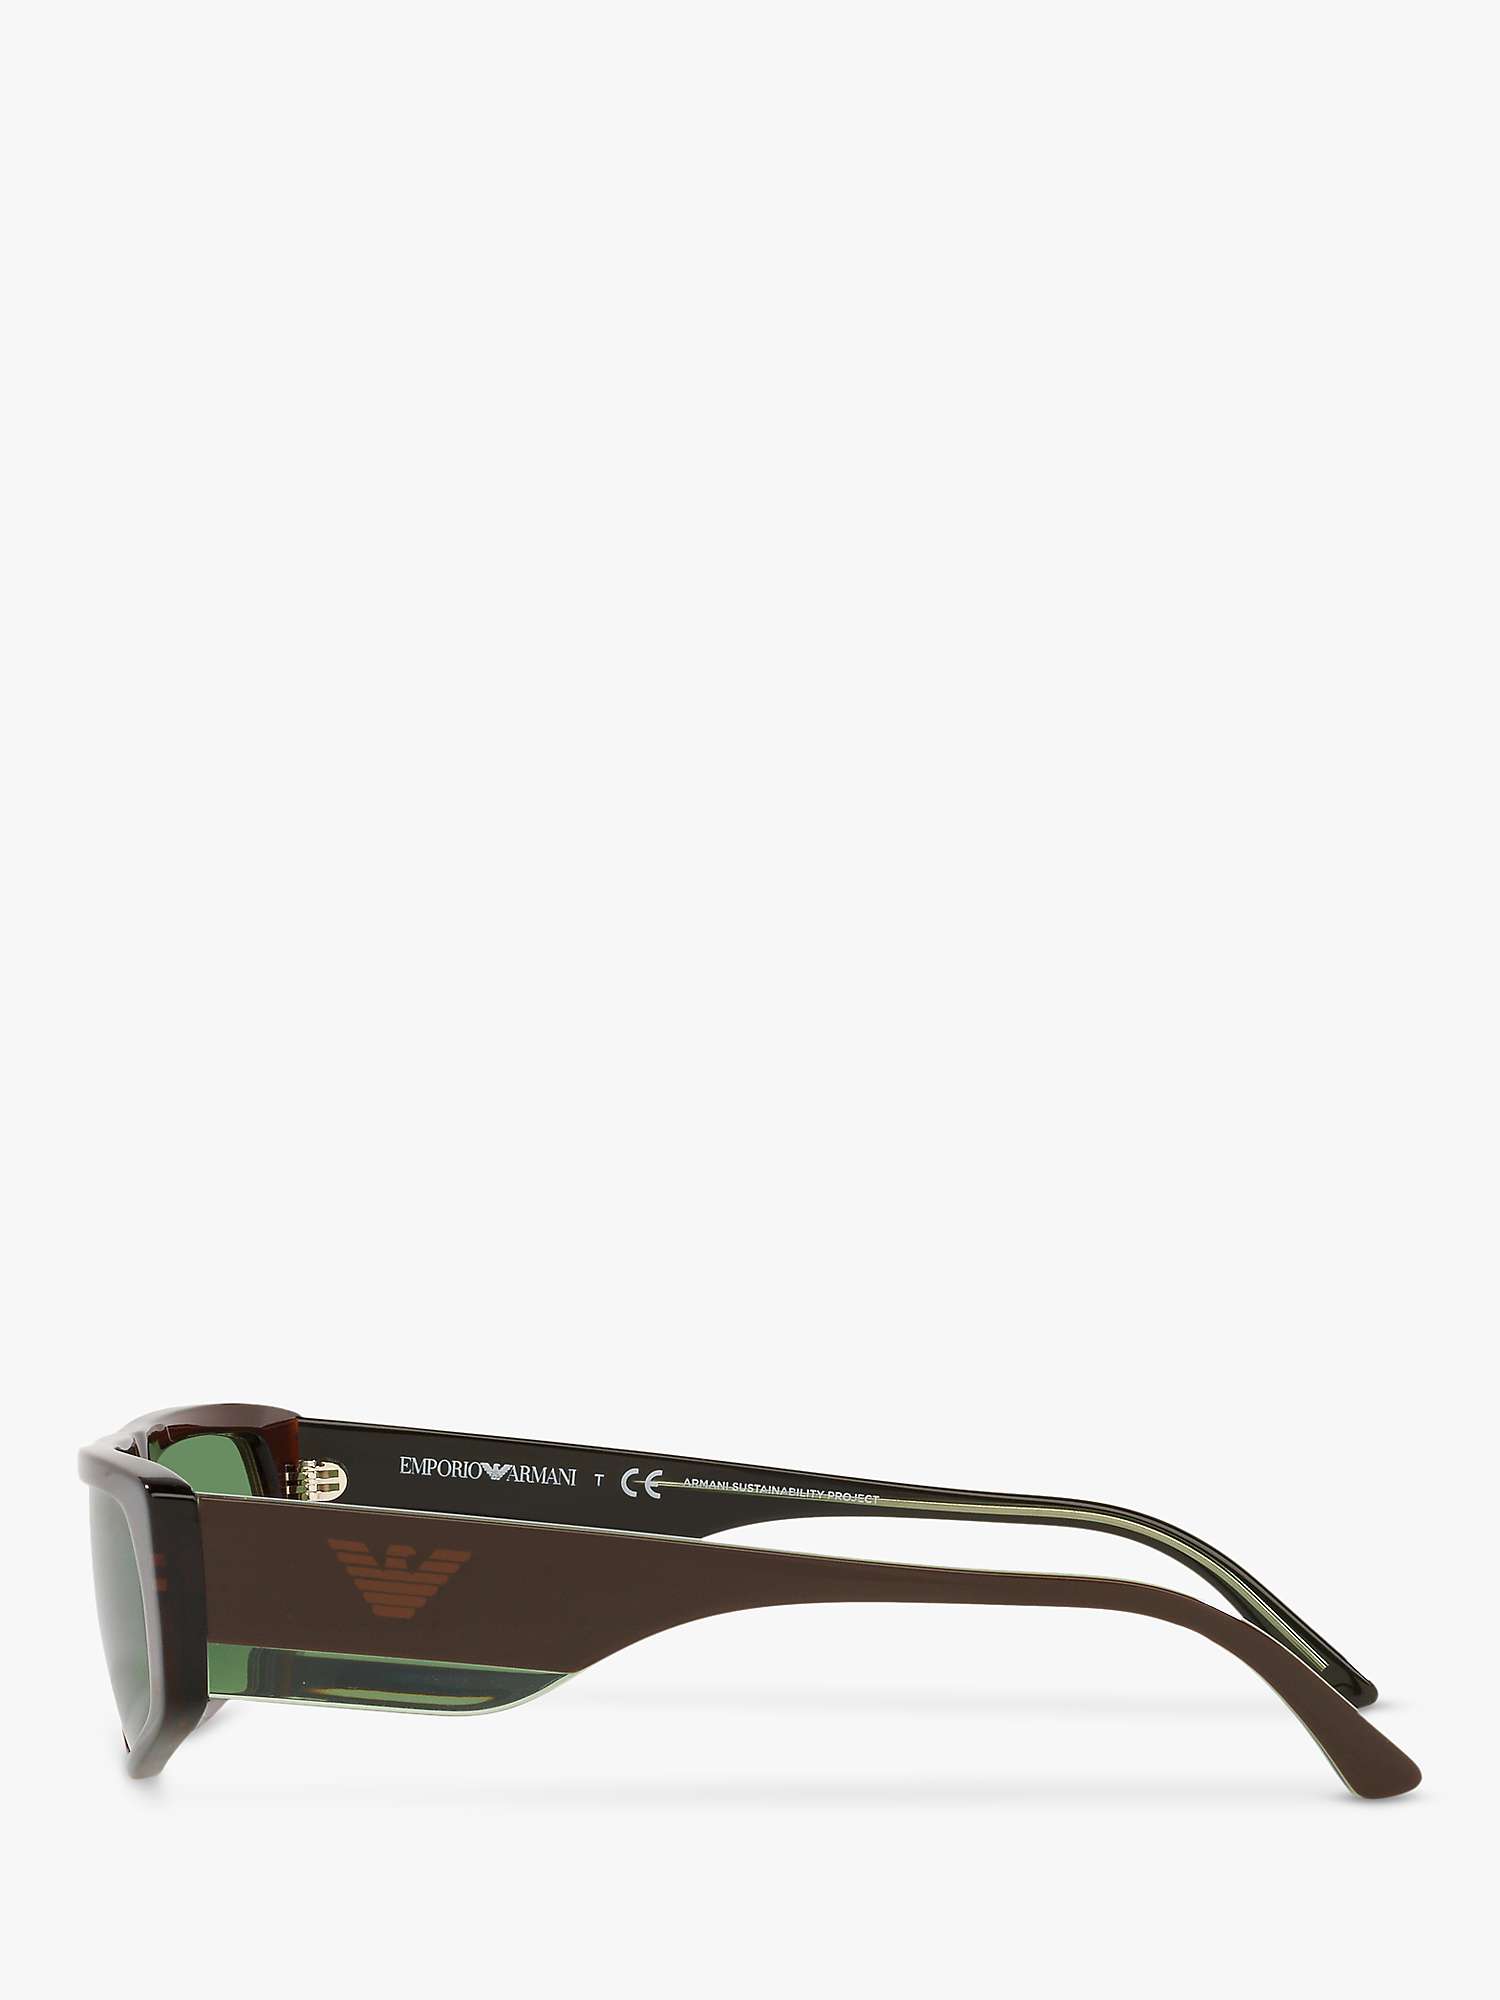 Buy Emporio Armani EA4168 Men's Pillow Sunglasses, Brown/Green Online at johnlewis.com